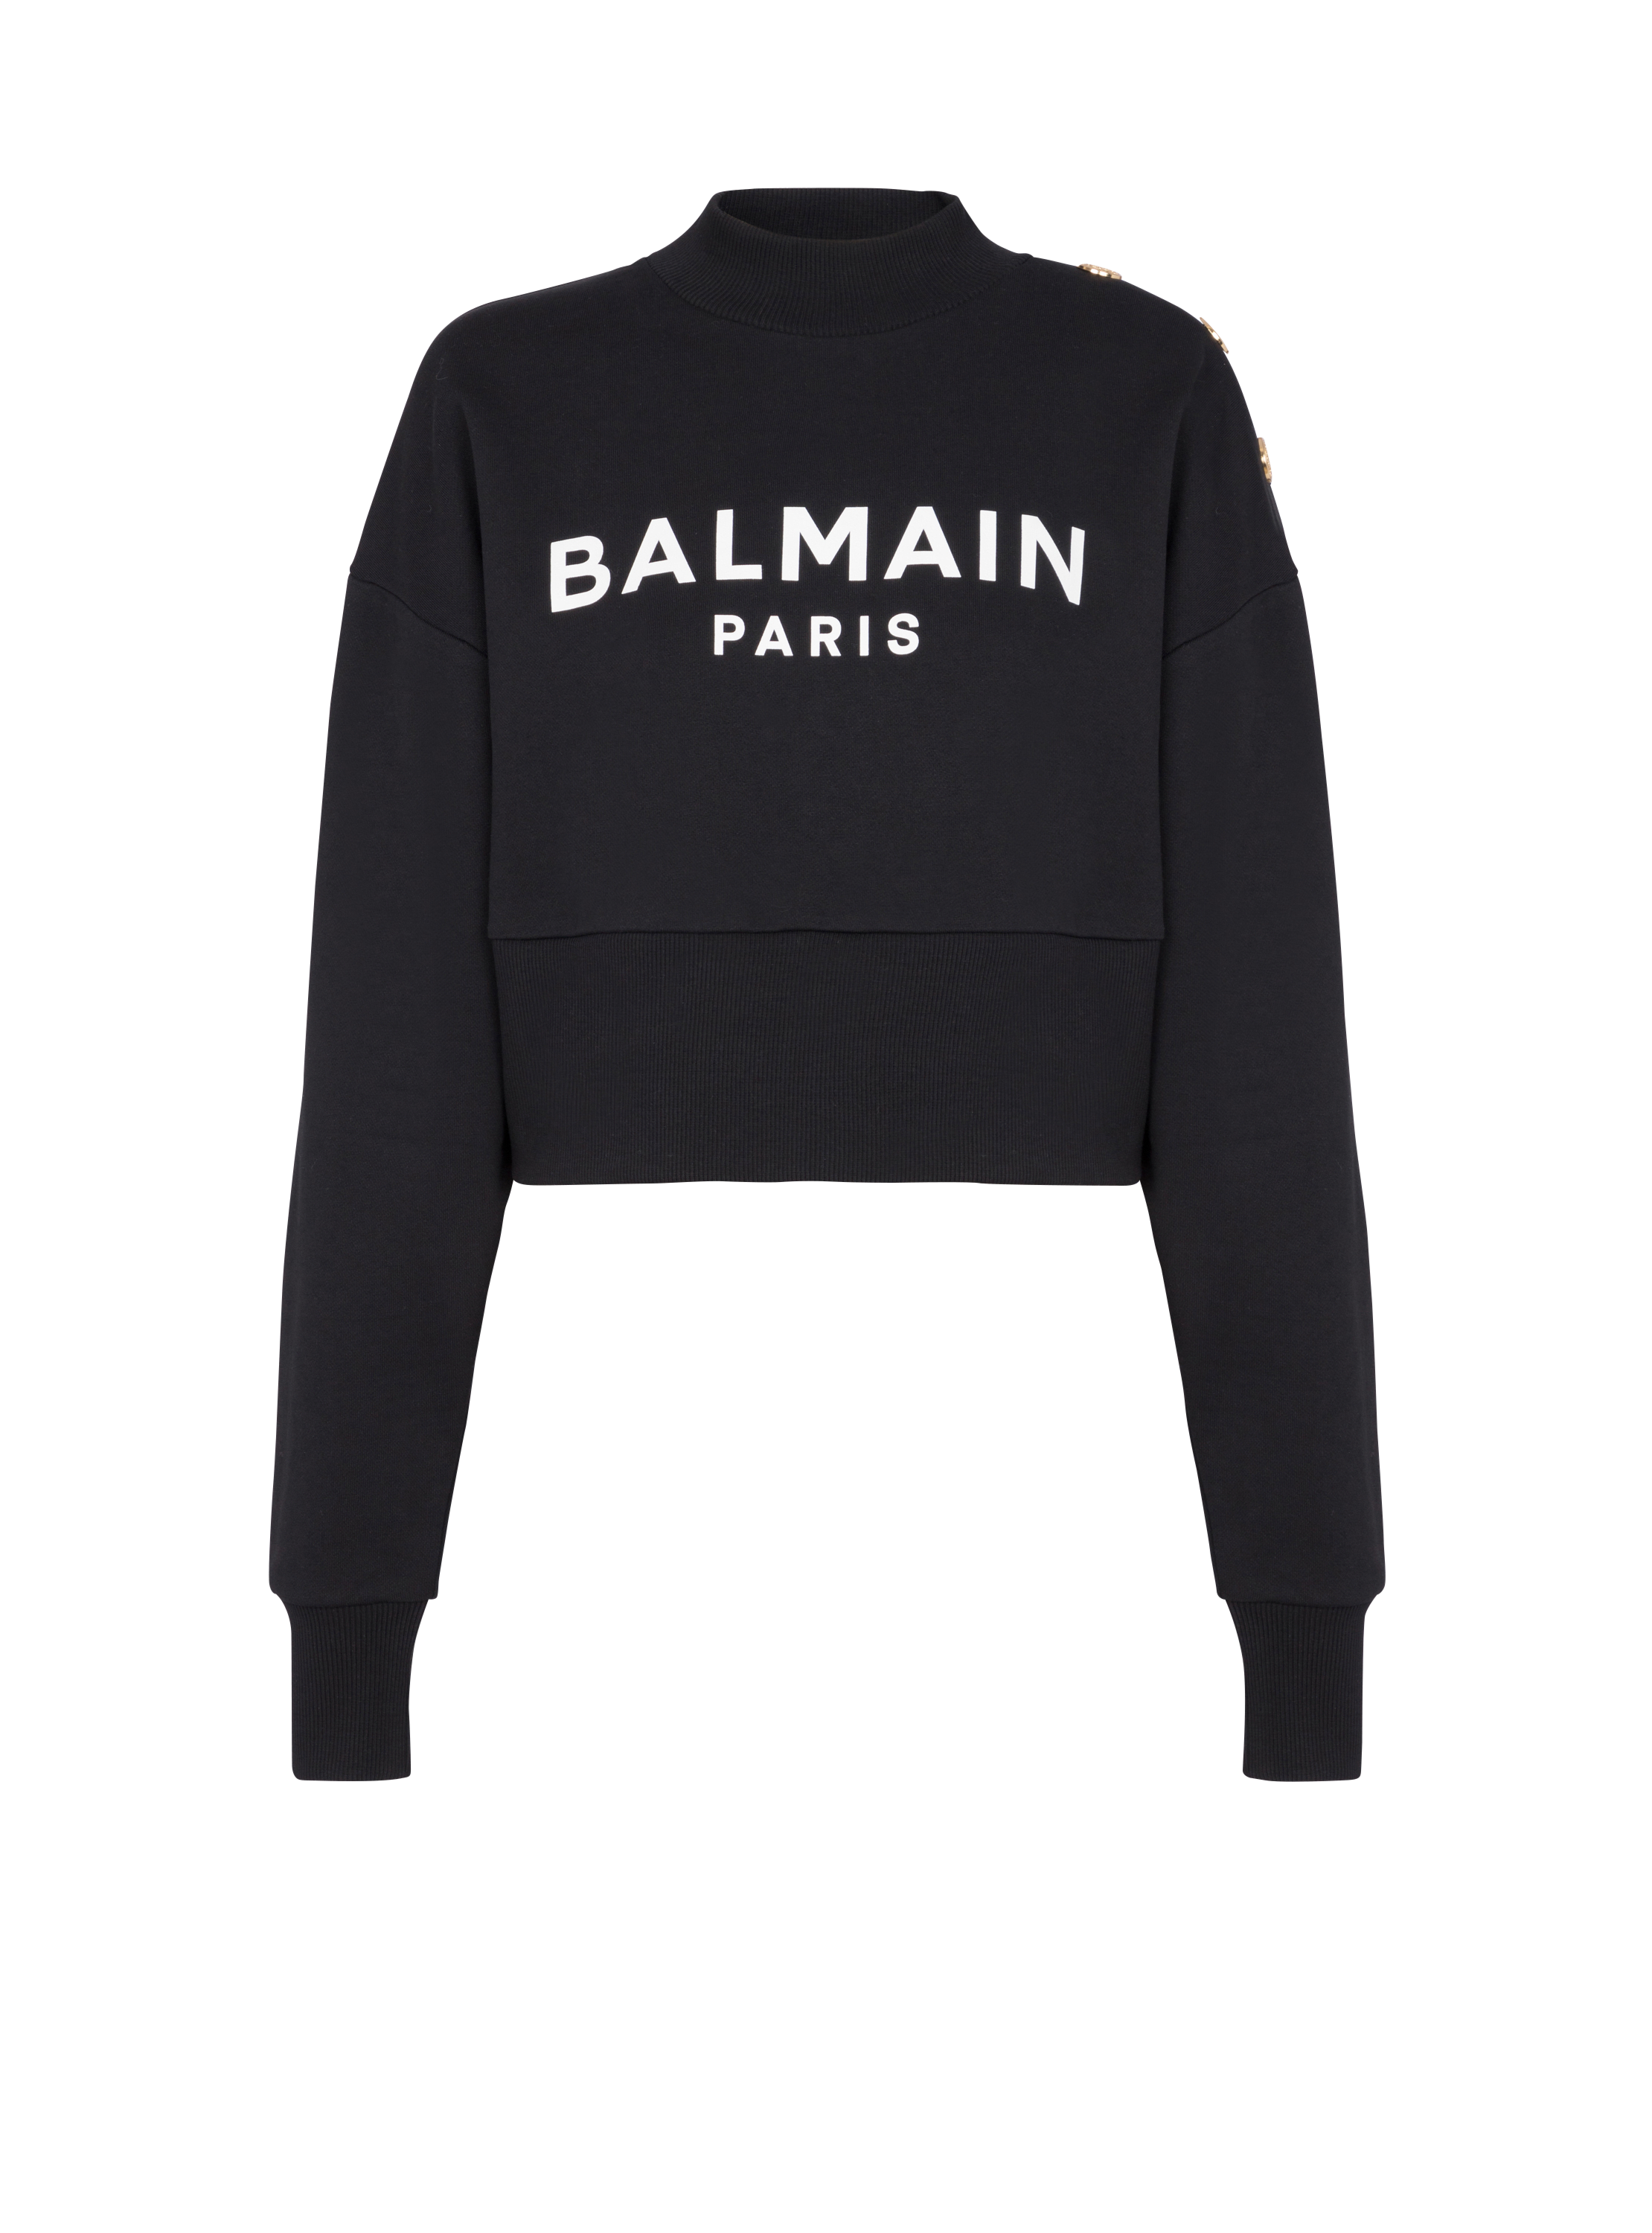 Balmain巴尔曼标志印花短款环保设计棉质运动衫, black, hi-res